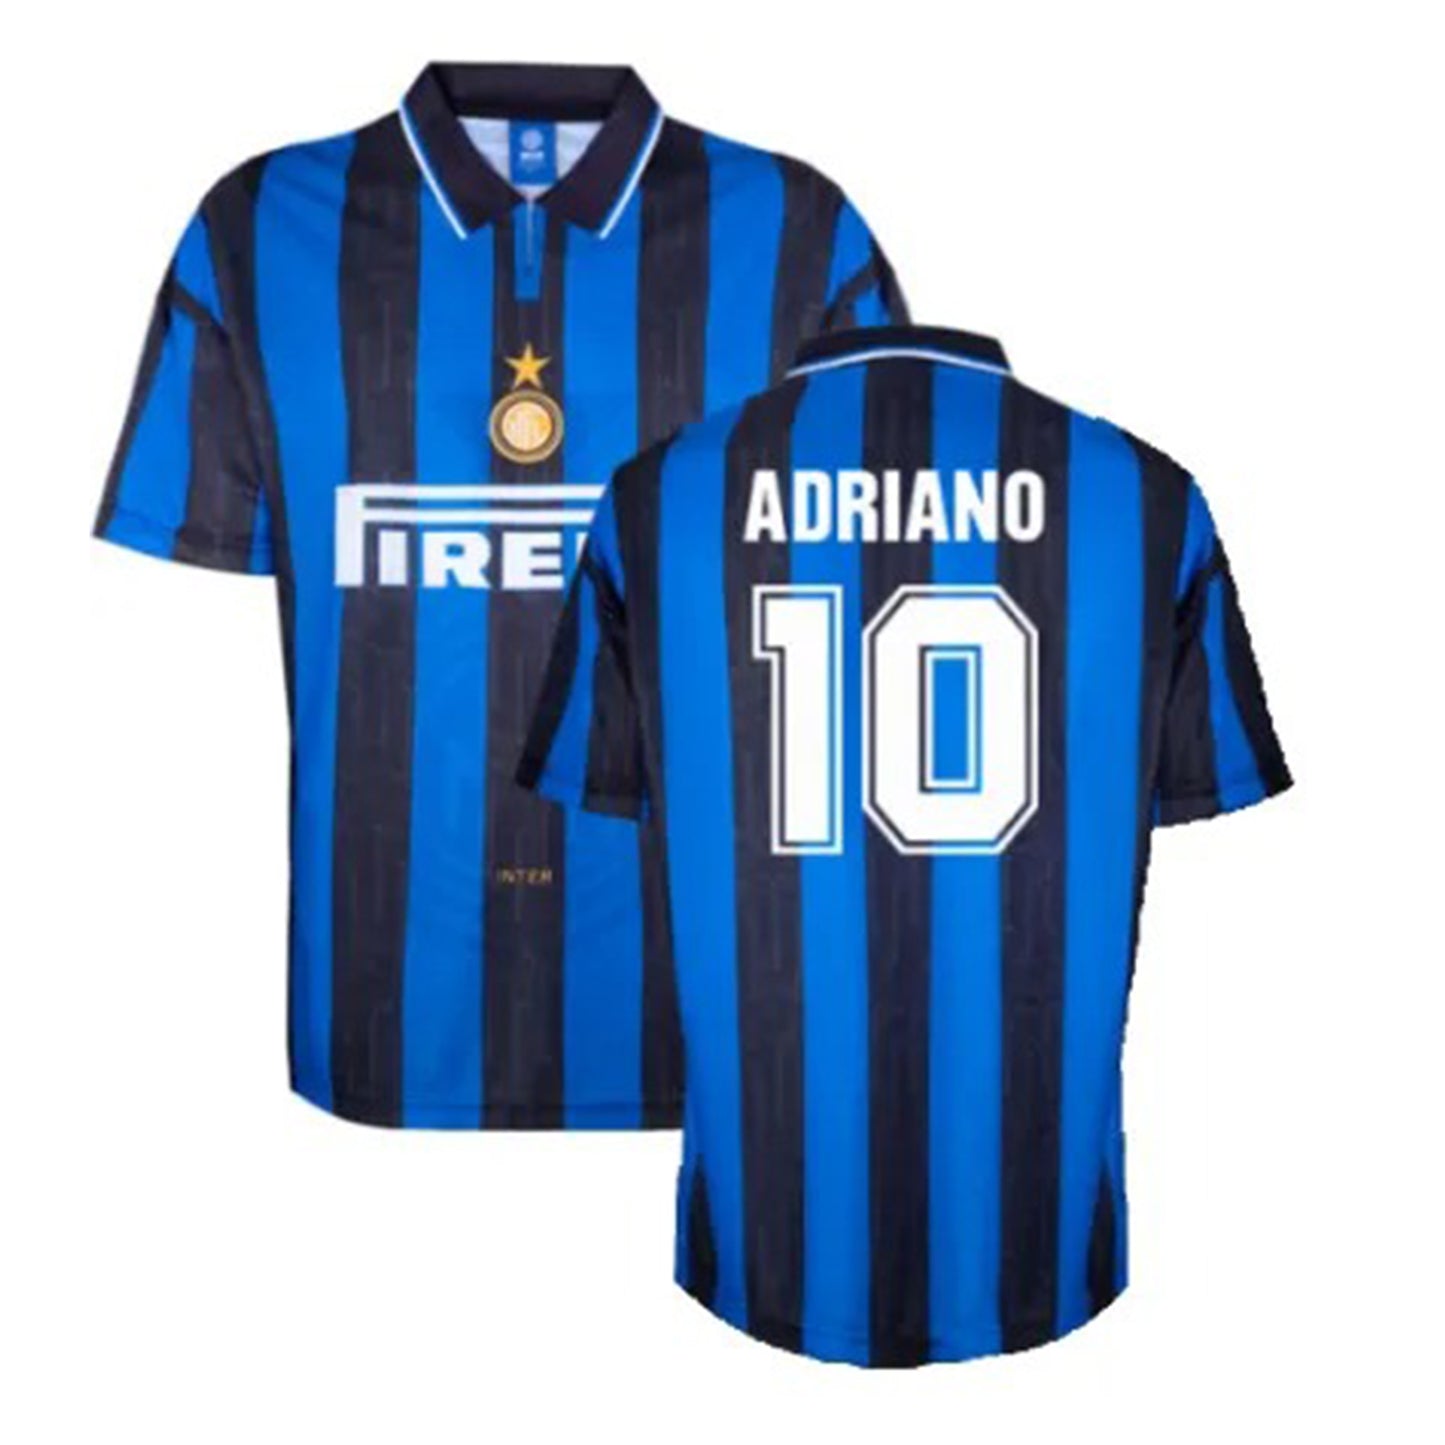 Adriano Inter Milan 10 Jersey